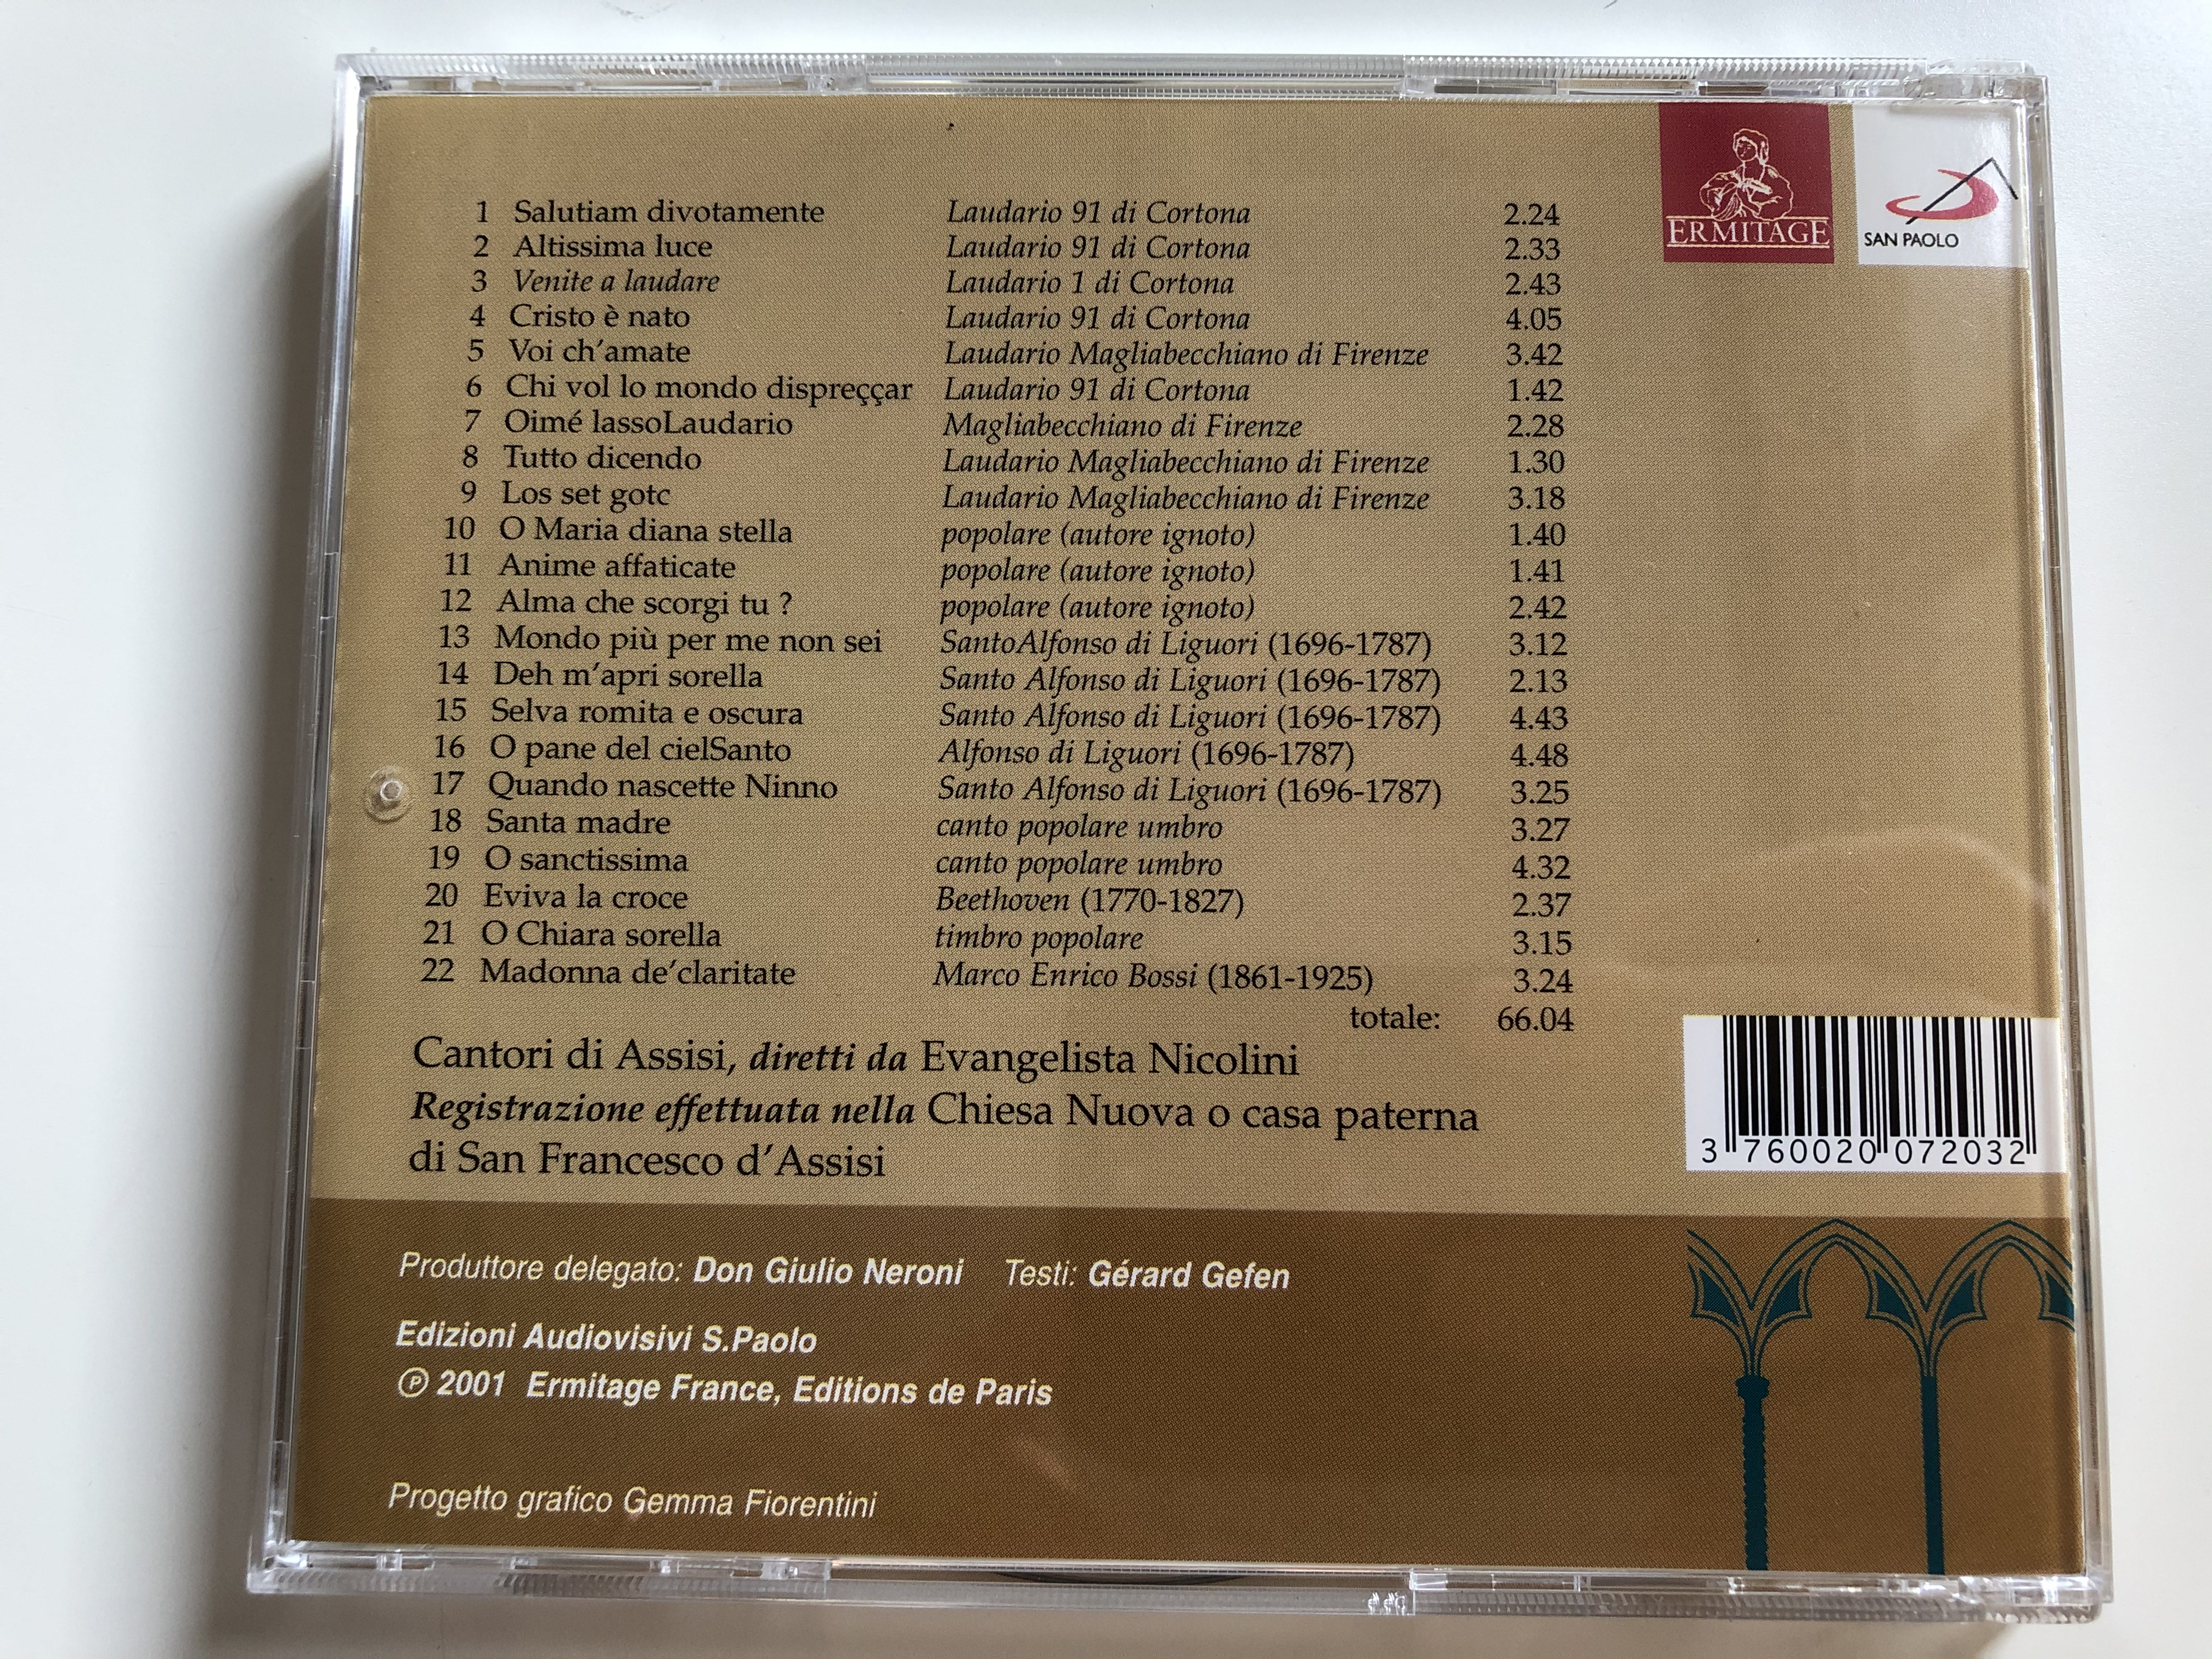 la-laude-franciscane-cantori-di-assisi-dirige-evangelista-nicolini-ermitage-audio-cd-2001-gd-203-6-.jpg